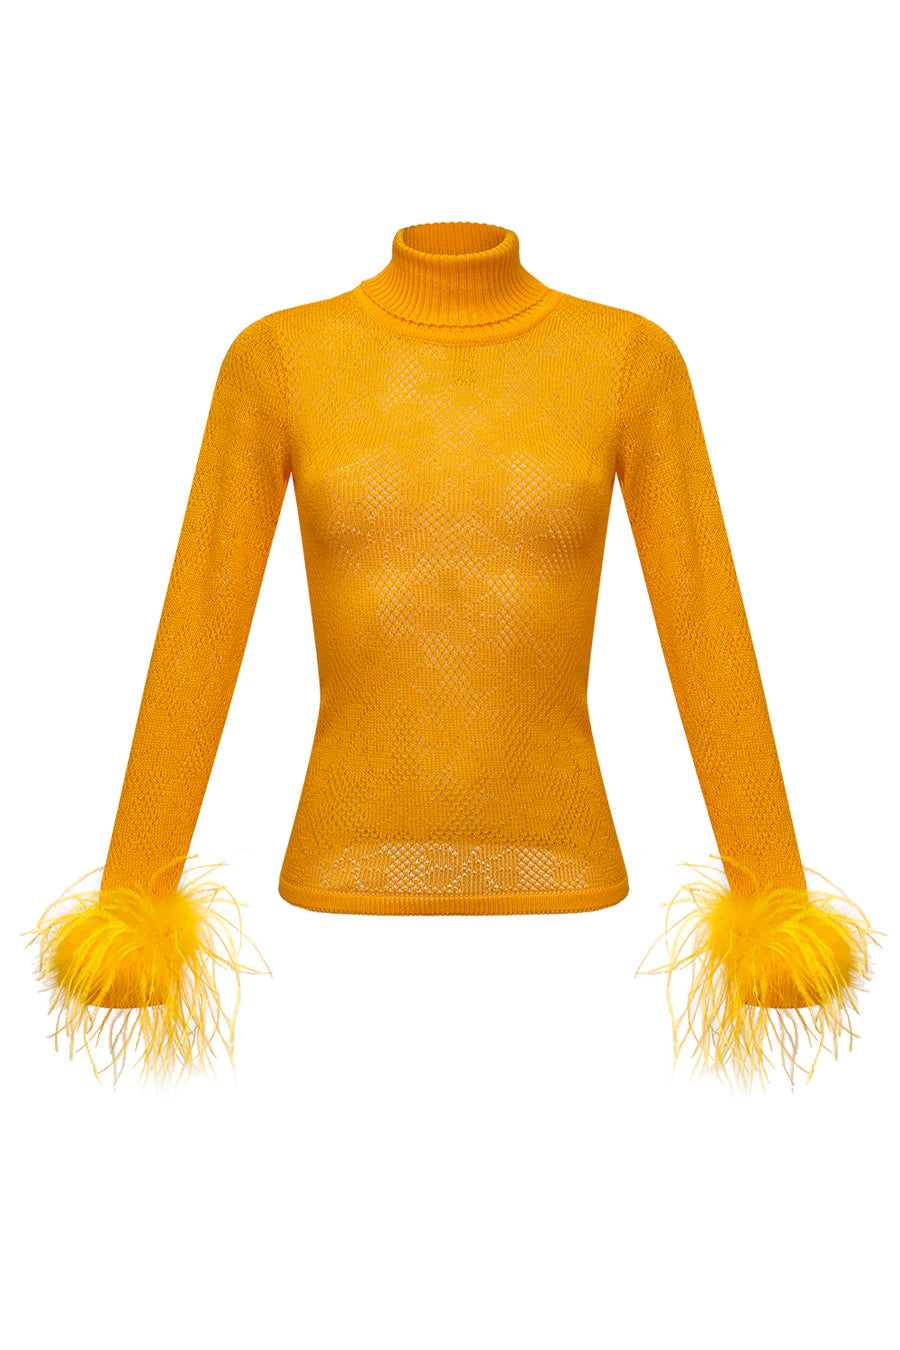 andreeva yellow knit sweater